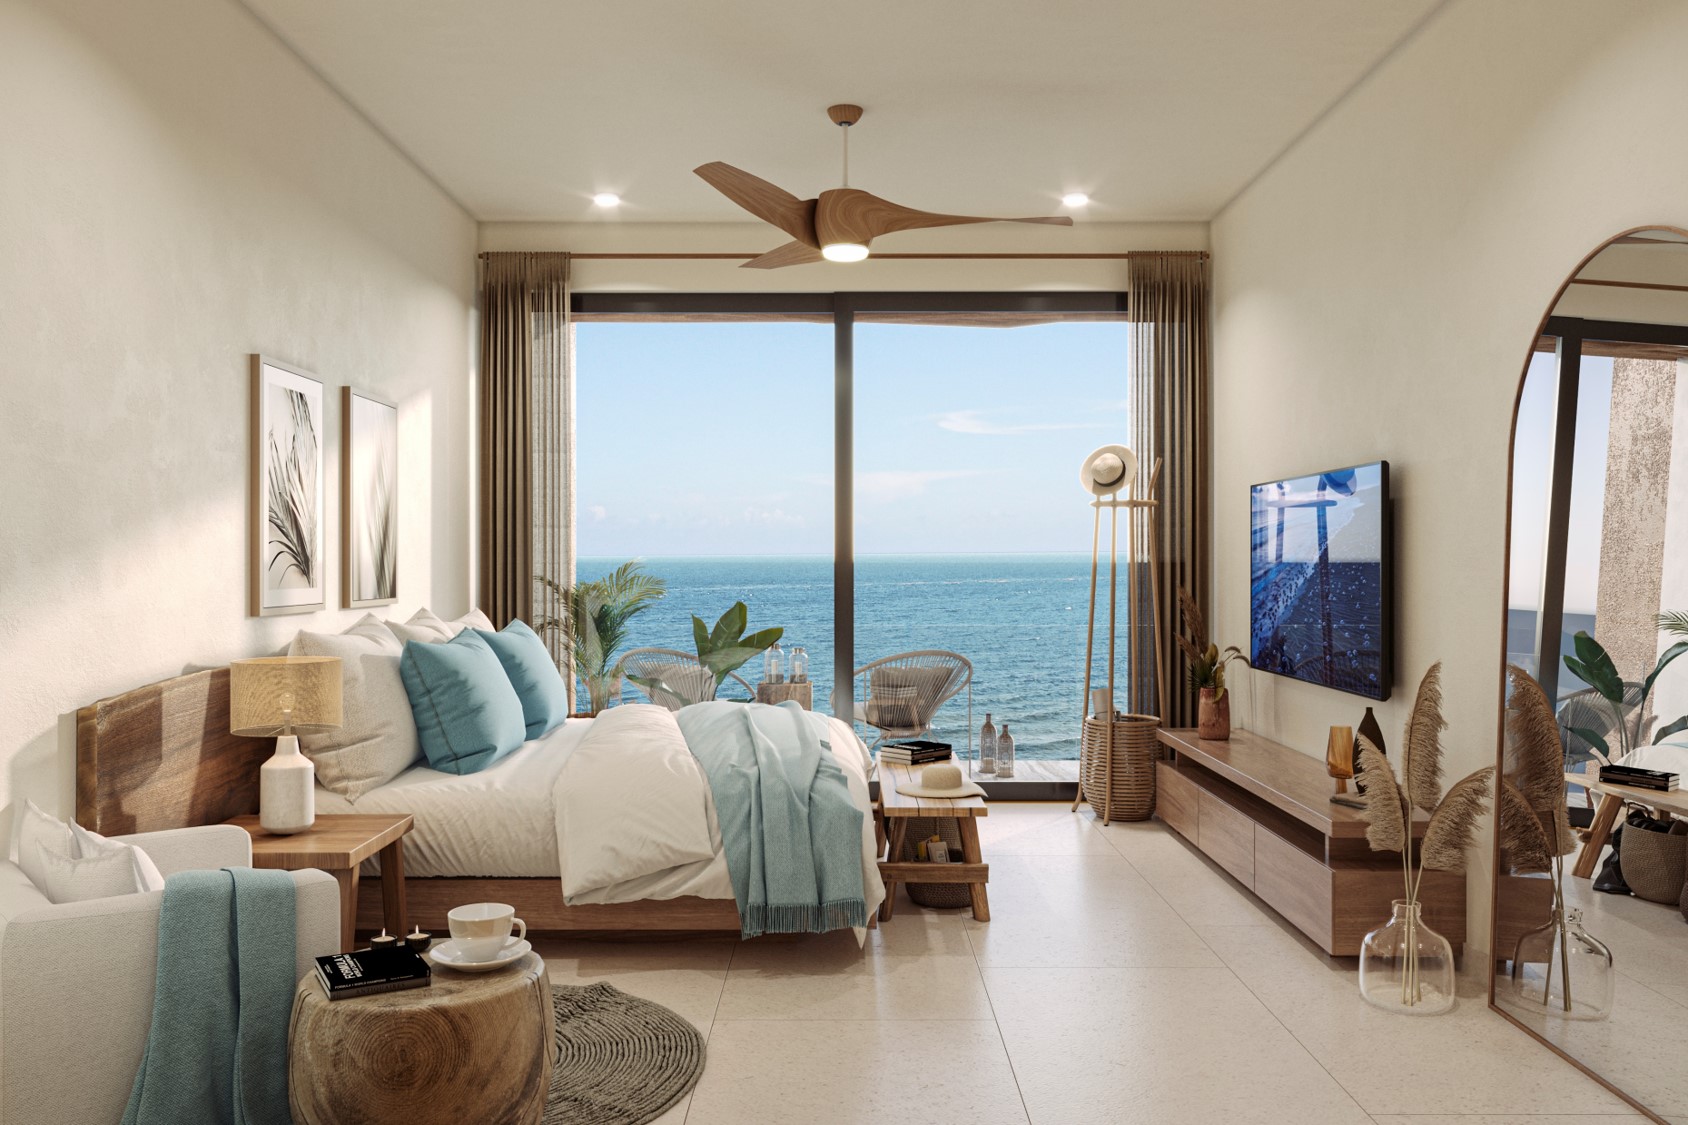 d luxury 4 bedroom condo with ocean view in tulum 041a guest bdrm